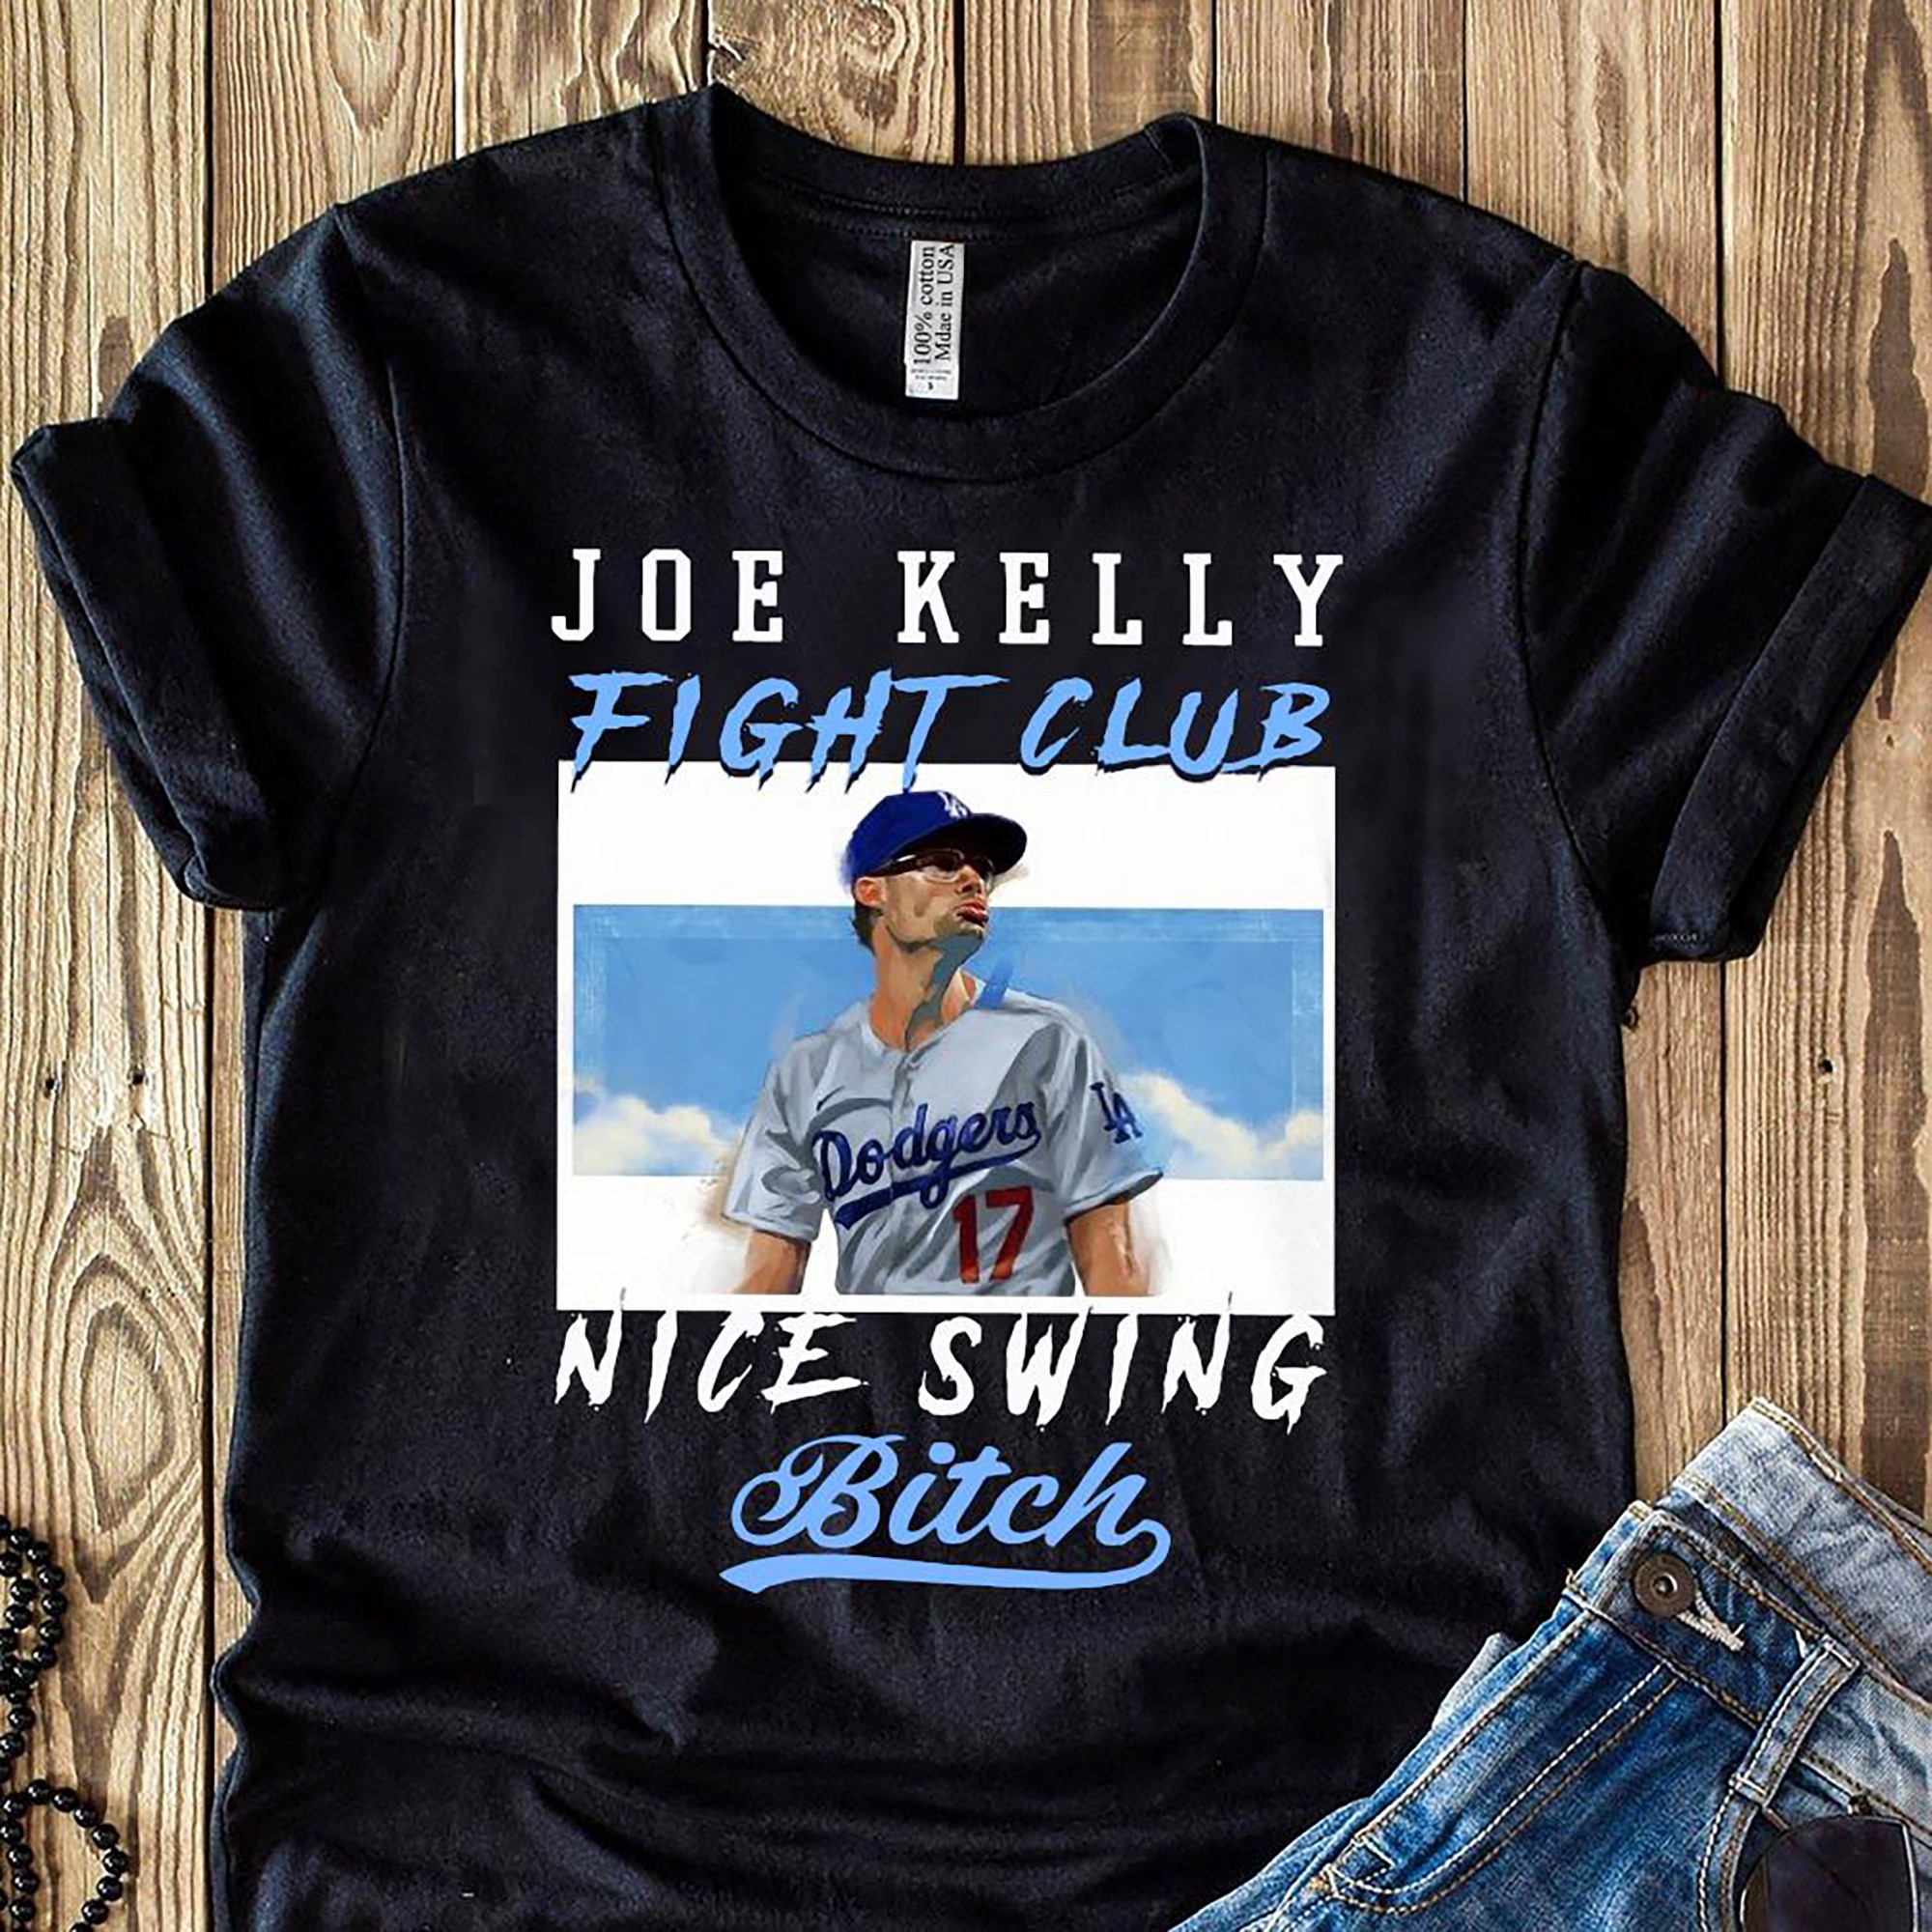 Joe Kelly Fight Club Nice Swing Bitch Funny Shirt Size Up To 5xl